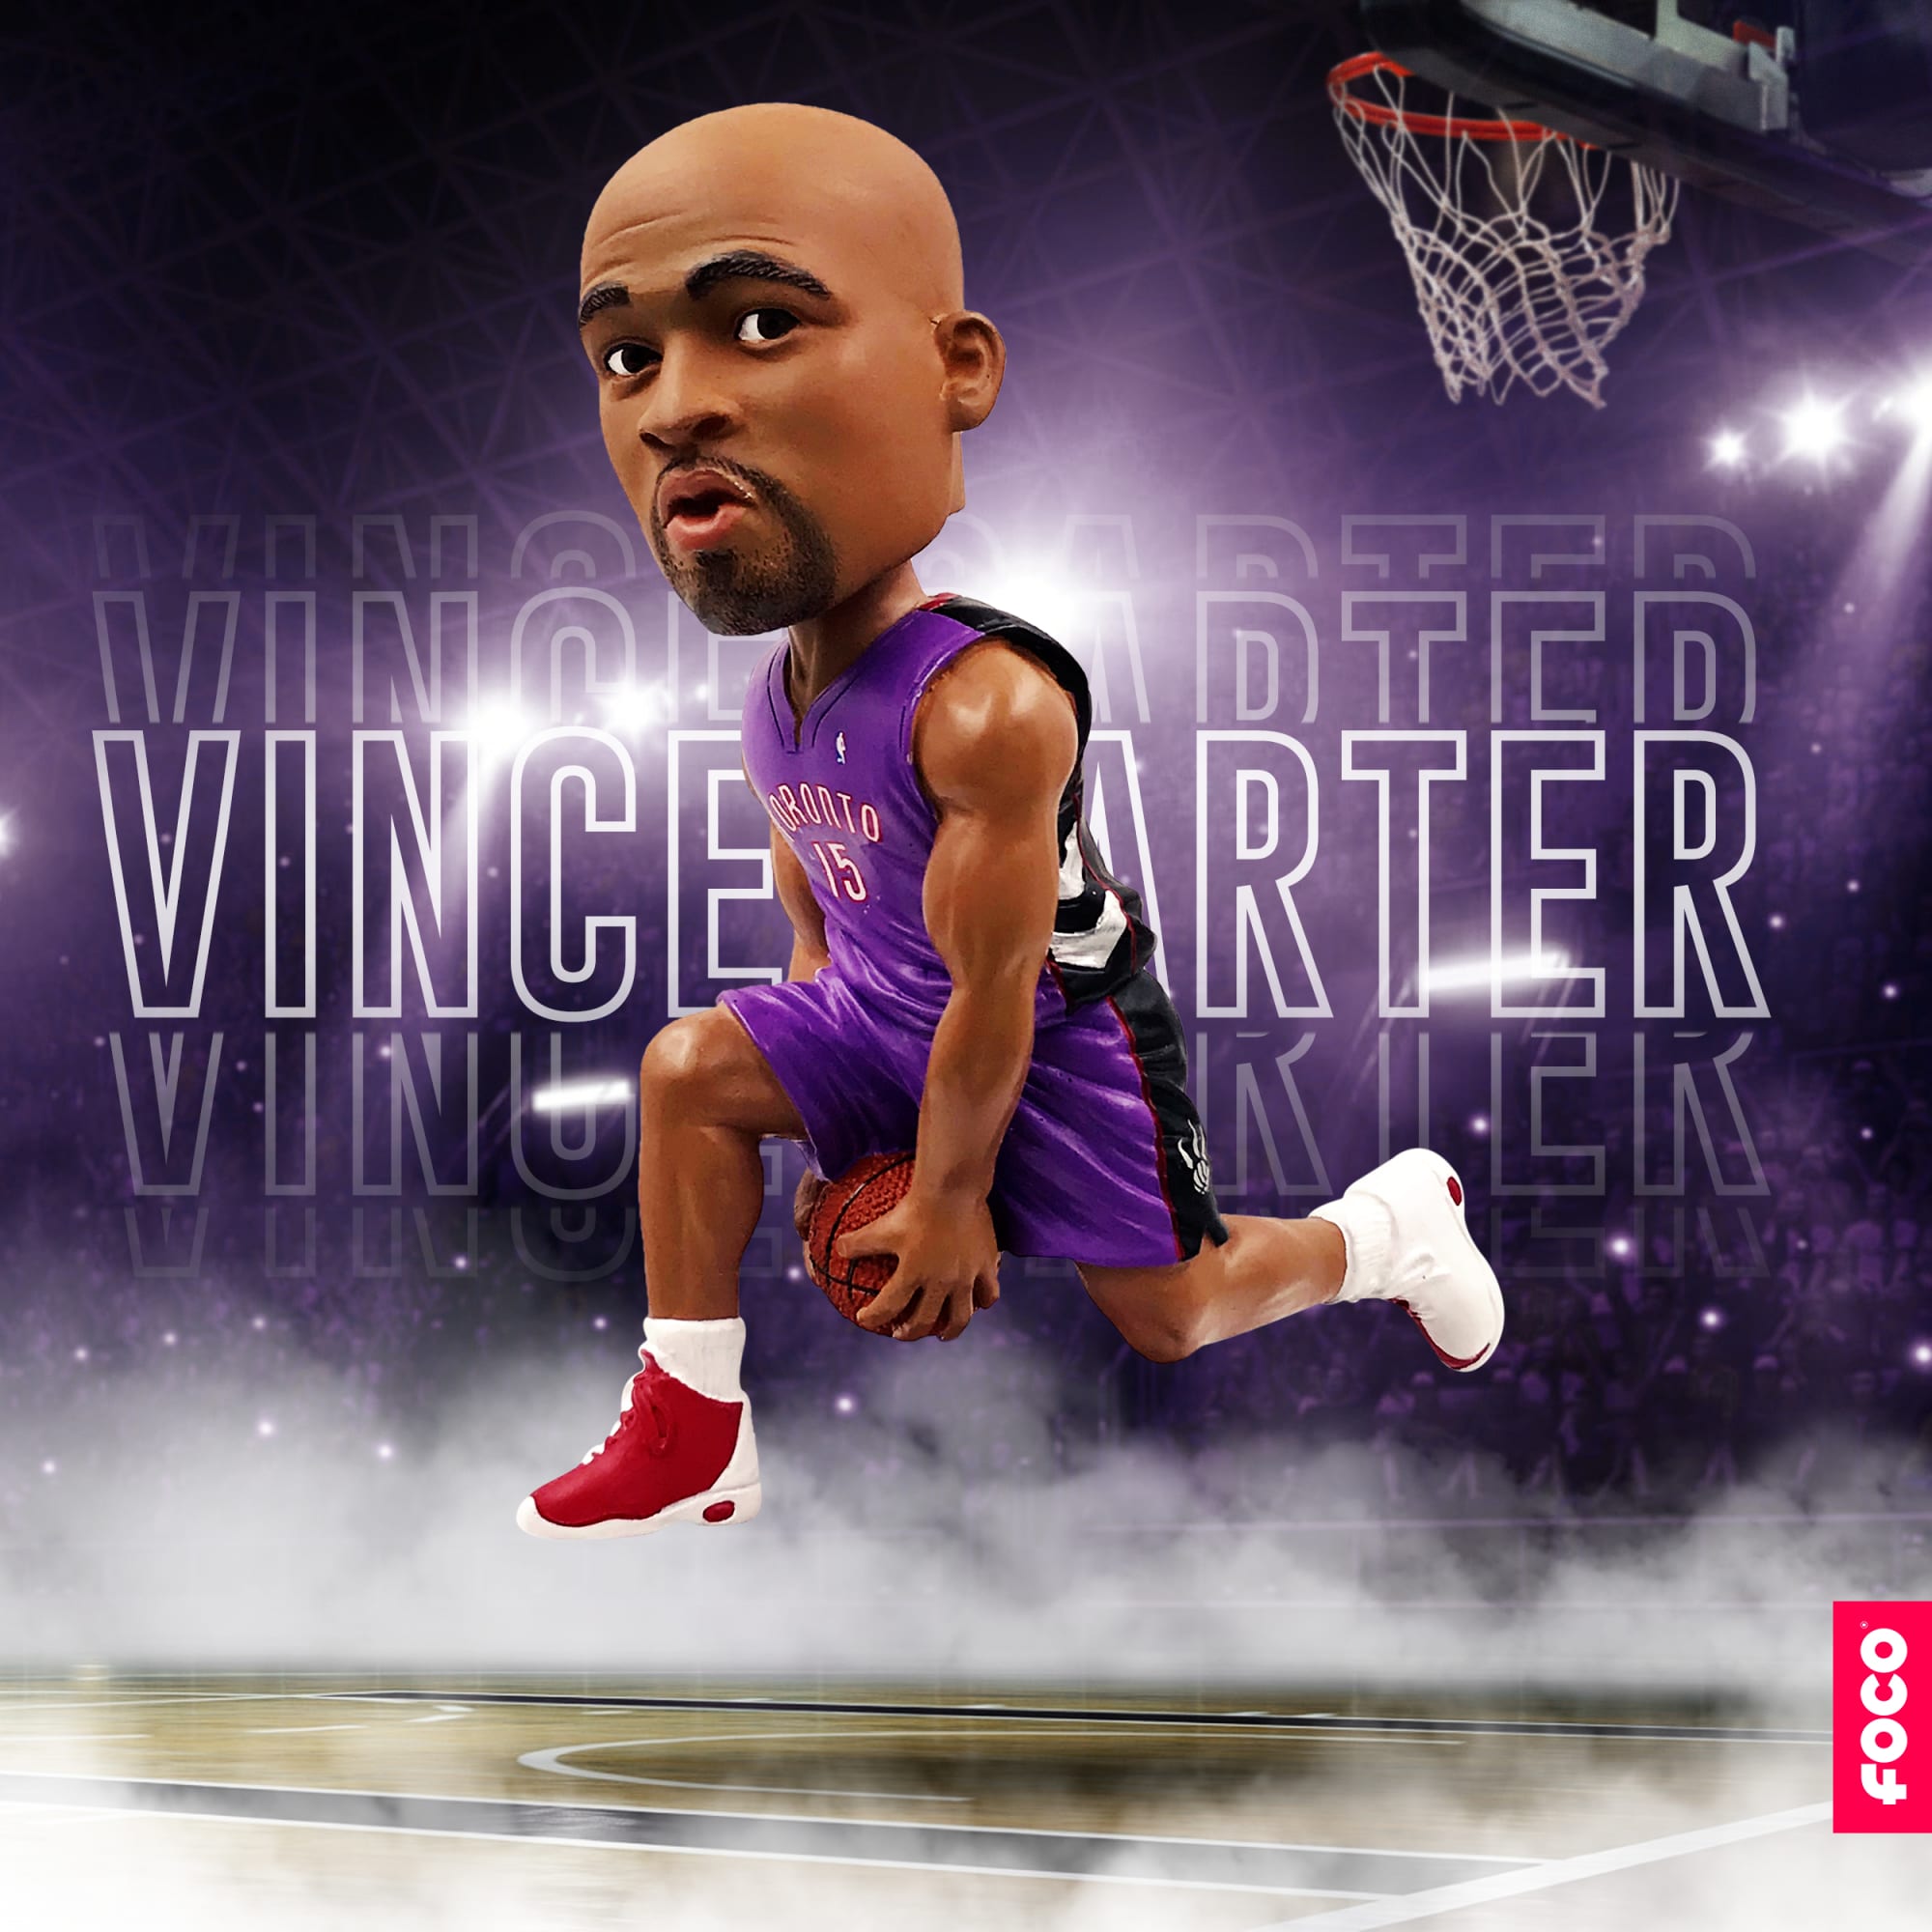 Vince Carter Slam Dunk Champion Toronto Raptors Poster